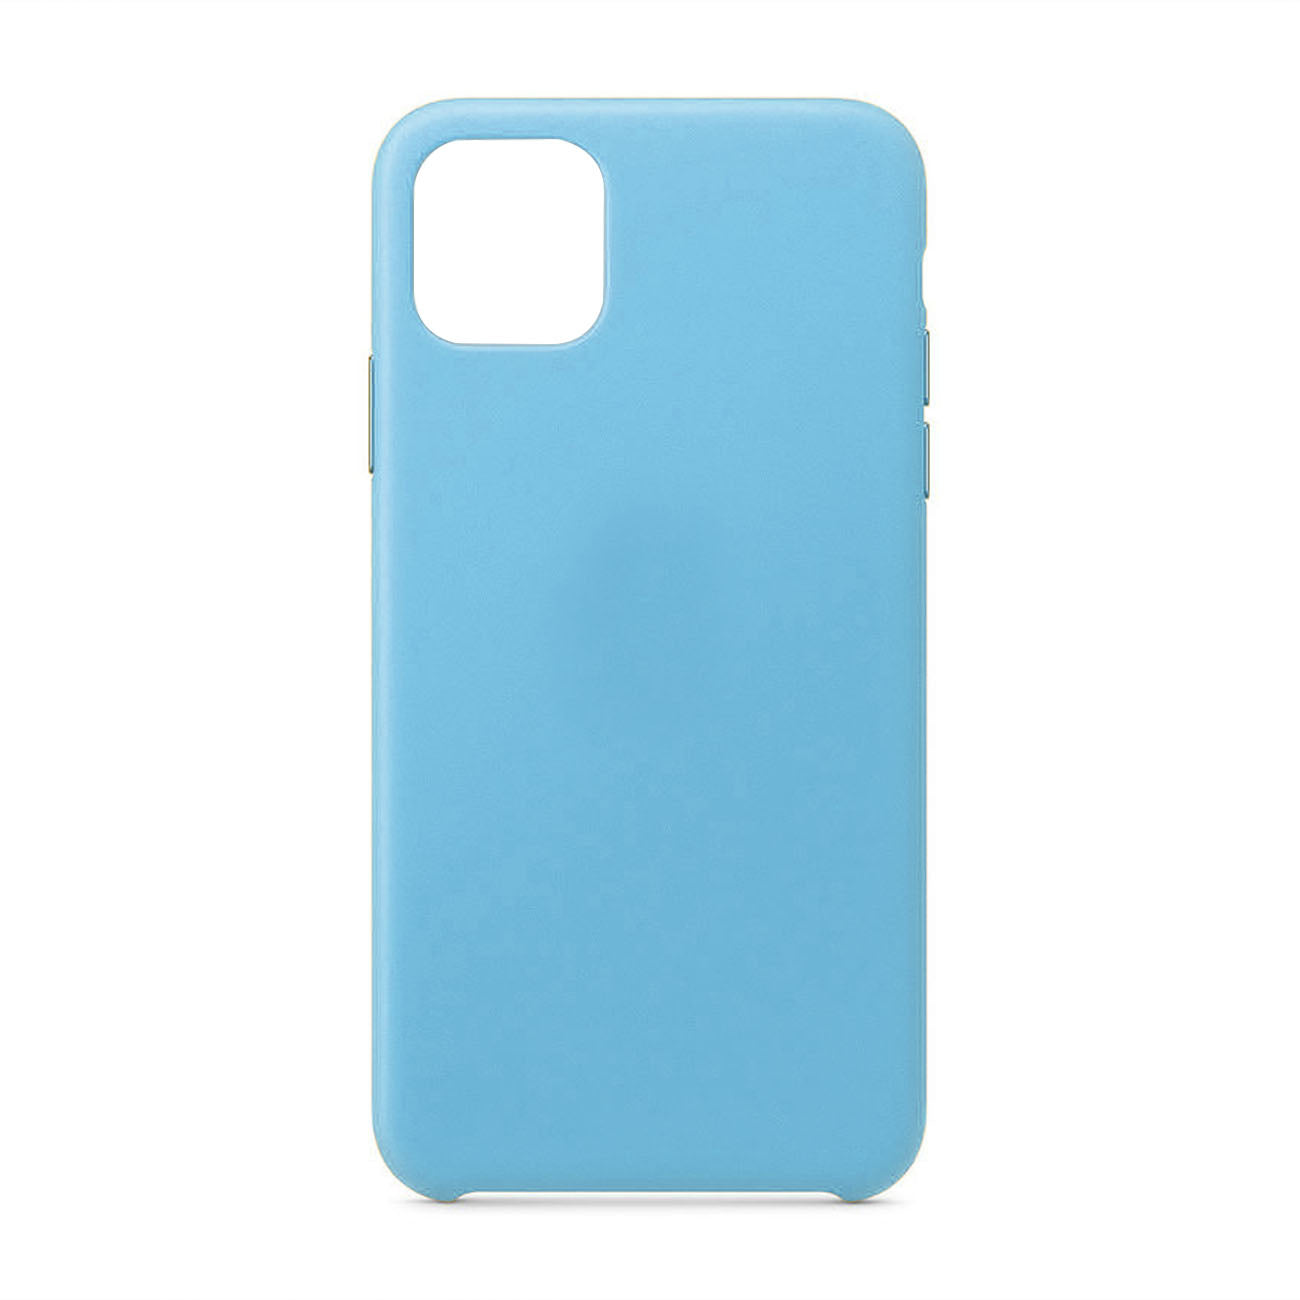 Reiko Apple iPhone 11 Pro Gummy Cases In Blue